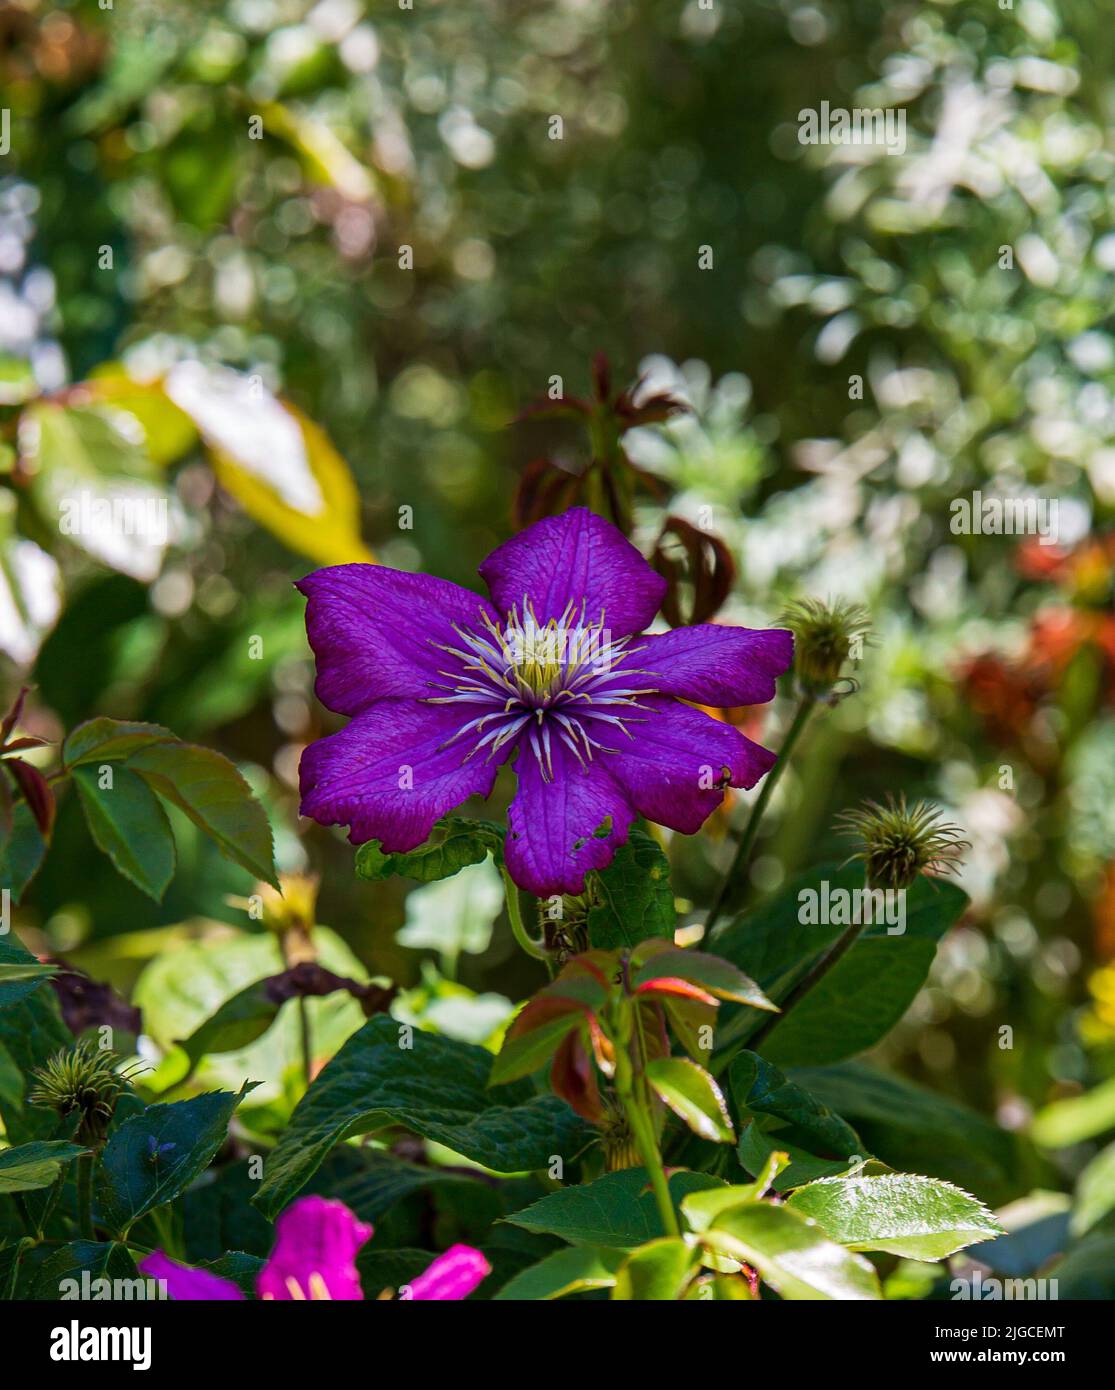 A closeup of a purple clematis flower in a garden Stock Photo